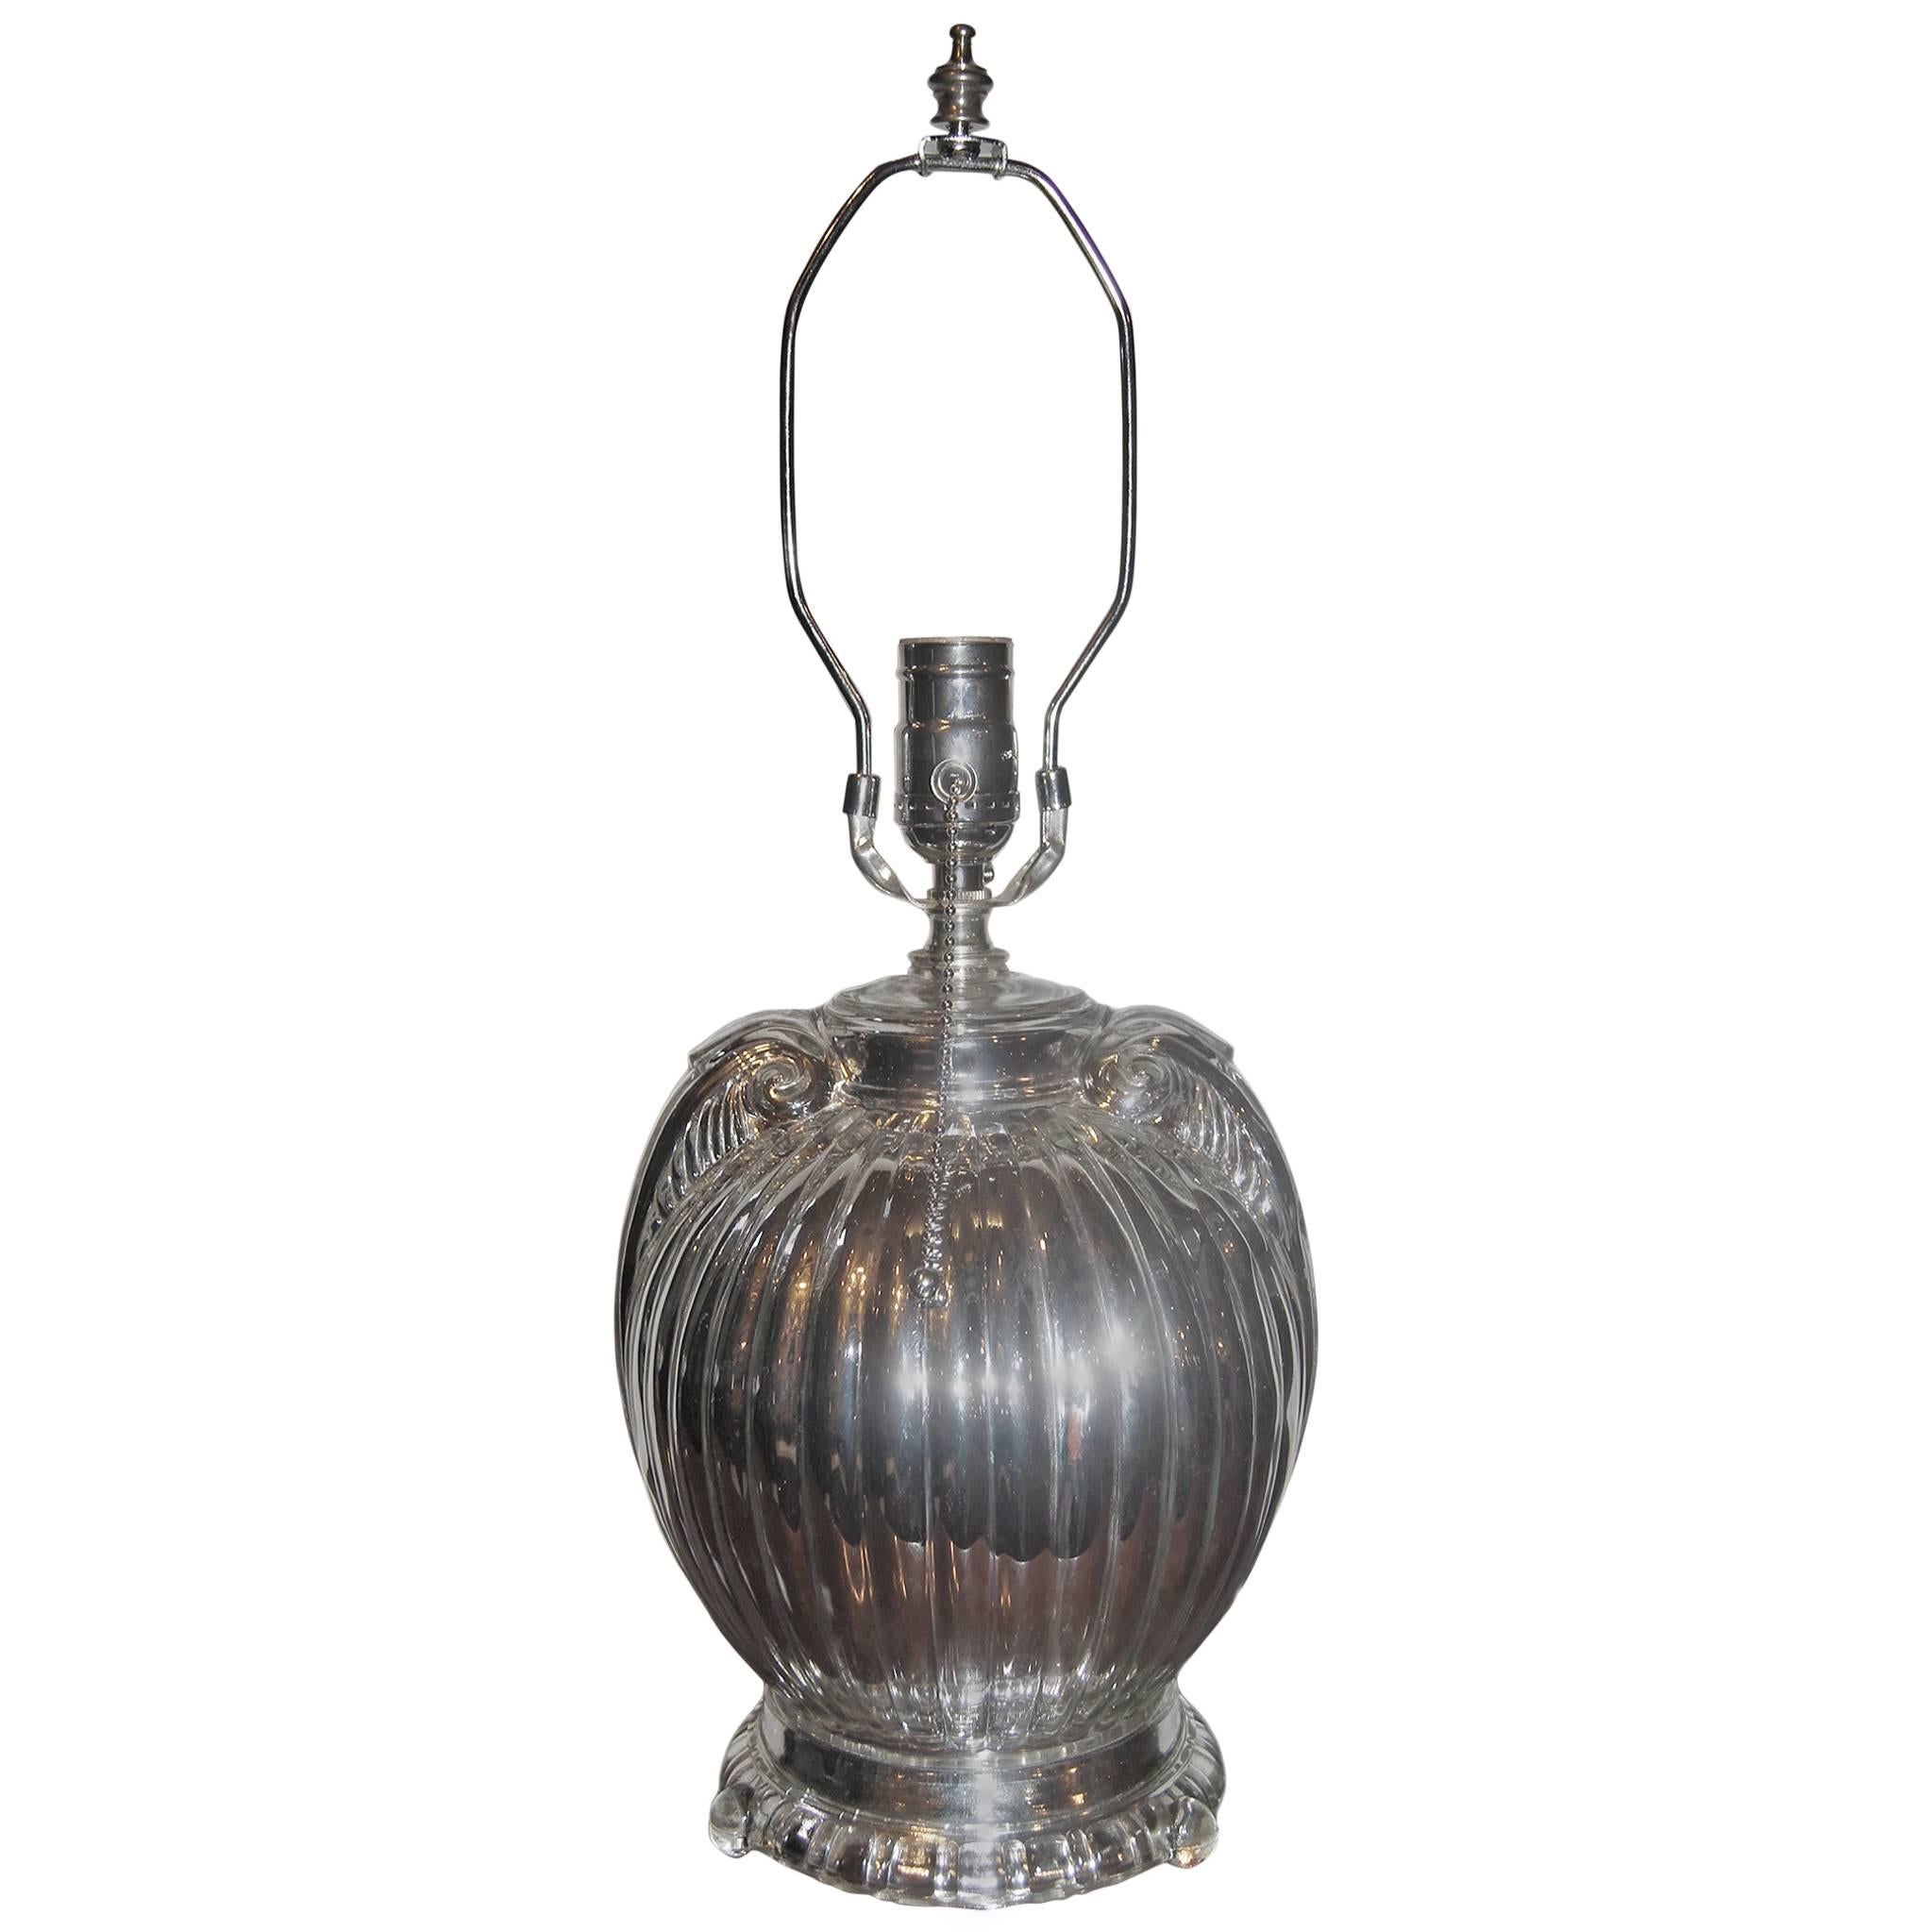 Urn Shaped Mercury Glass Lamp For Sale